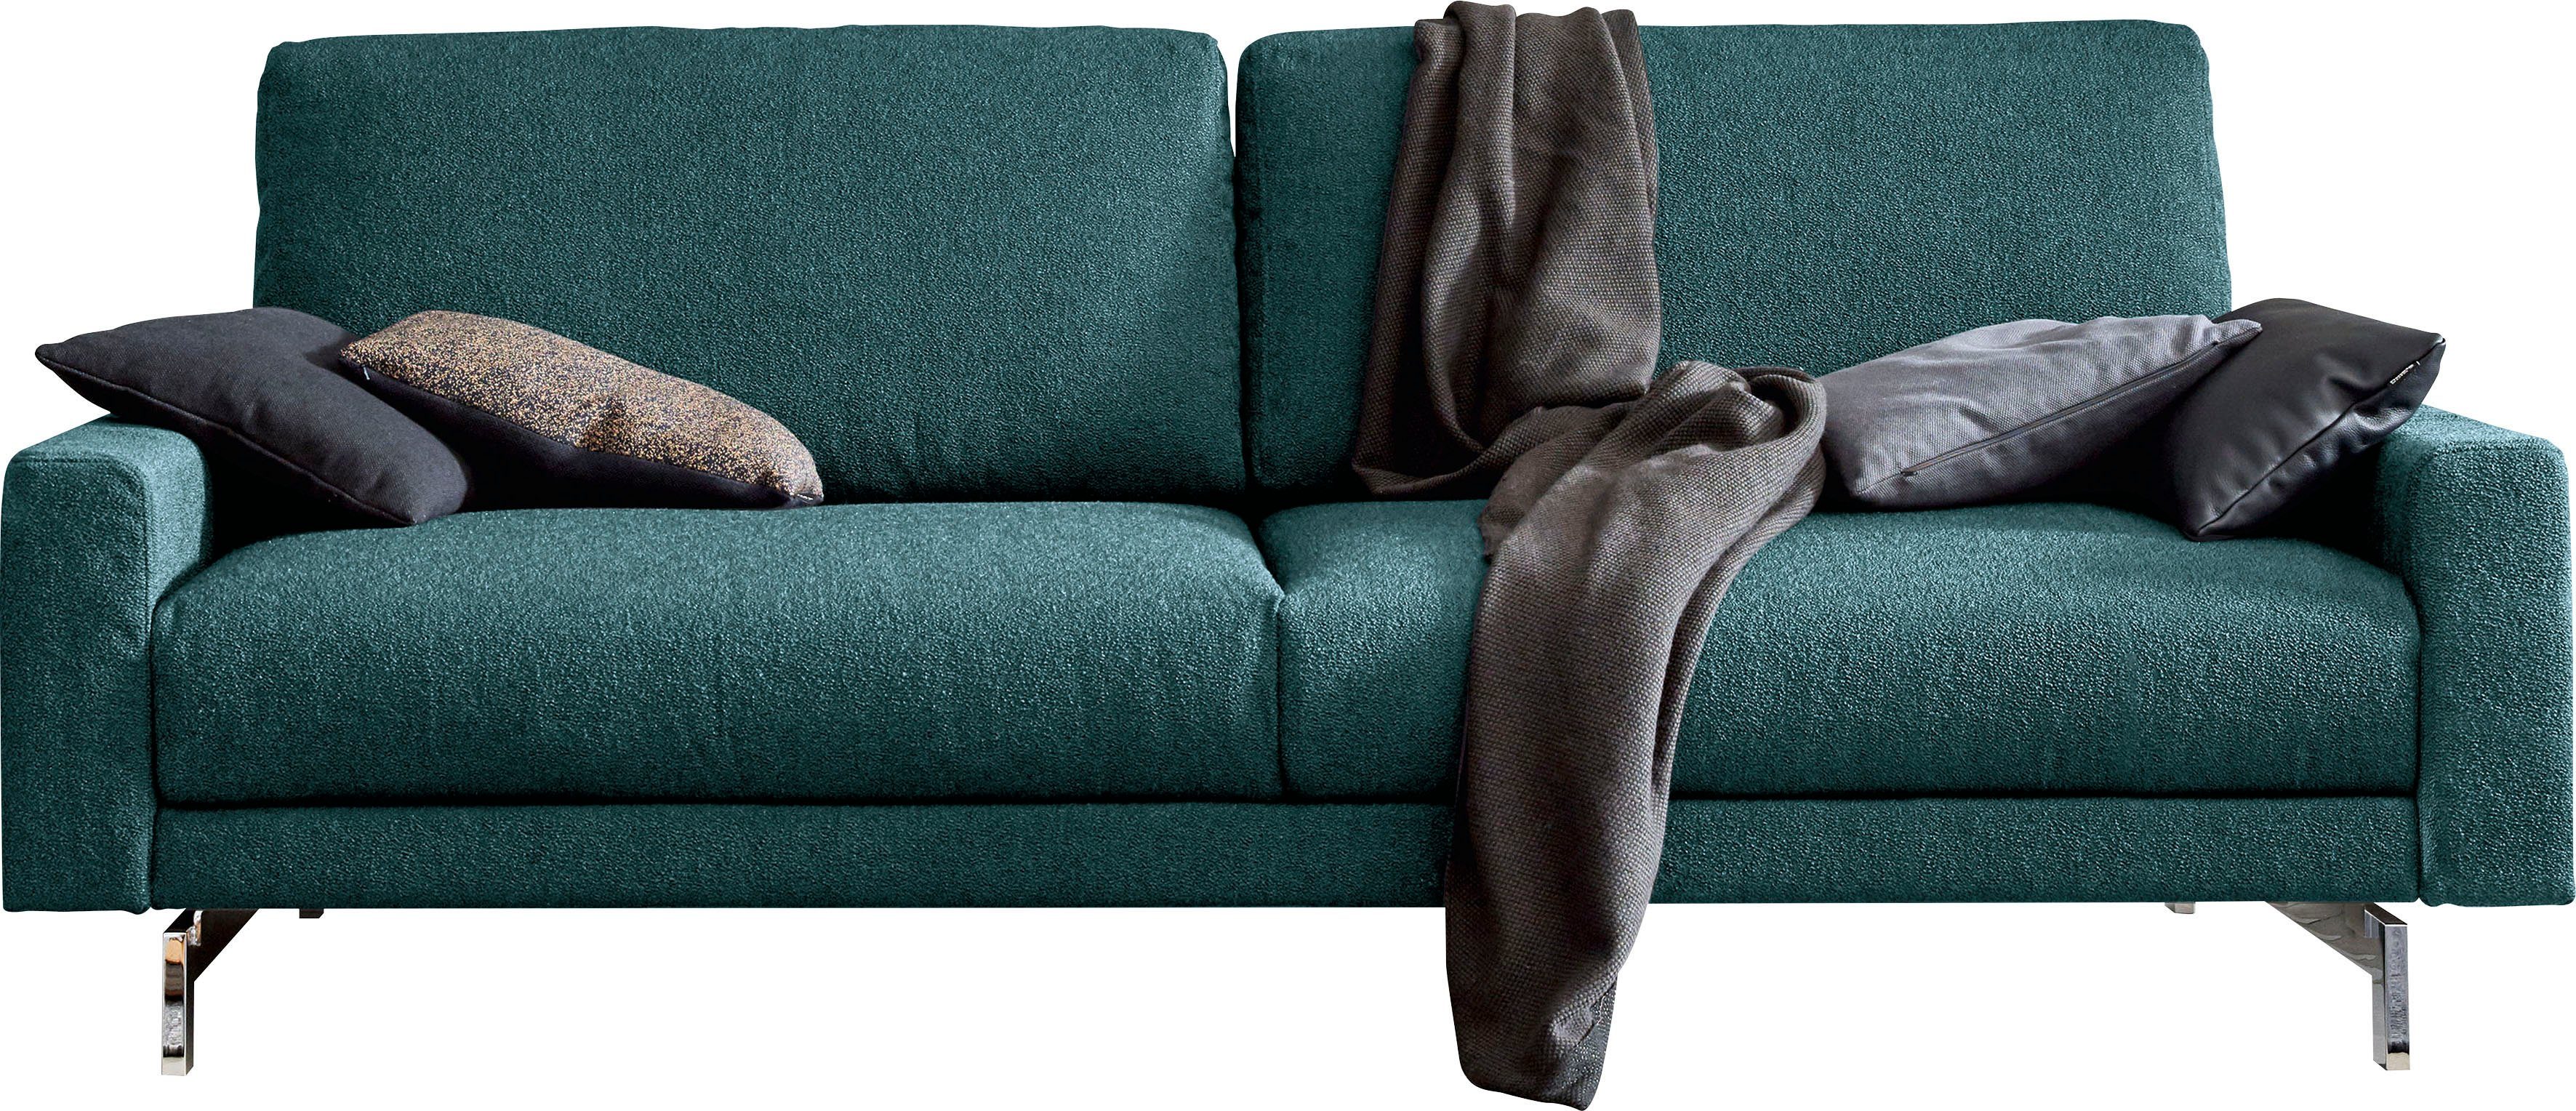 hülsta Armlehne Fuß hs.450, cm glänzend, niedrig, 3-Sitzer sofa chromfarben Breite 204